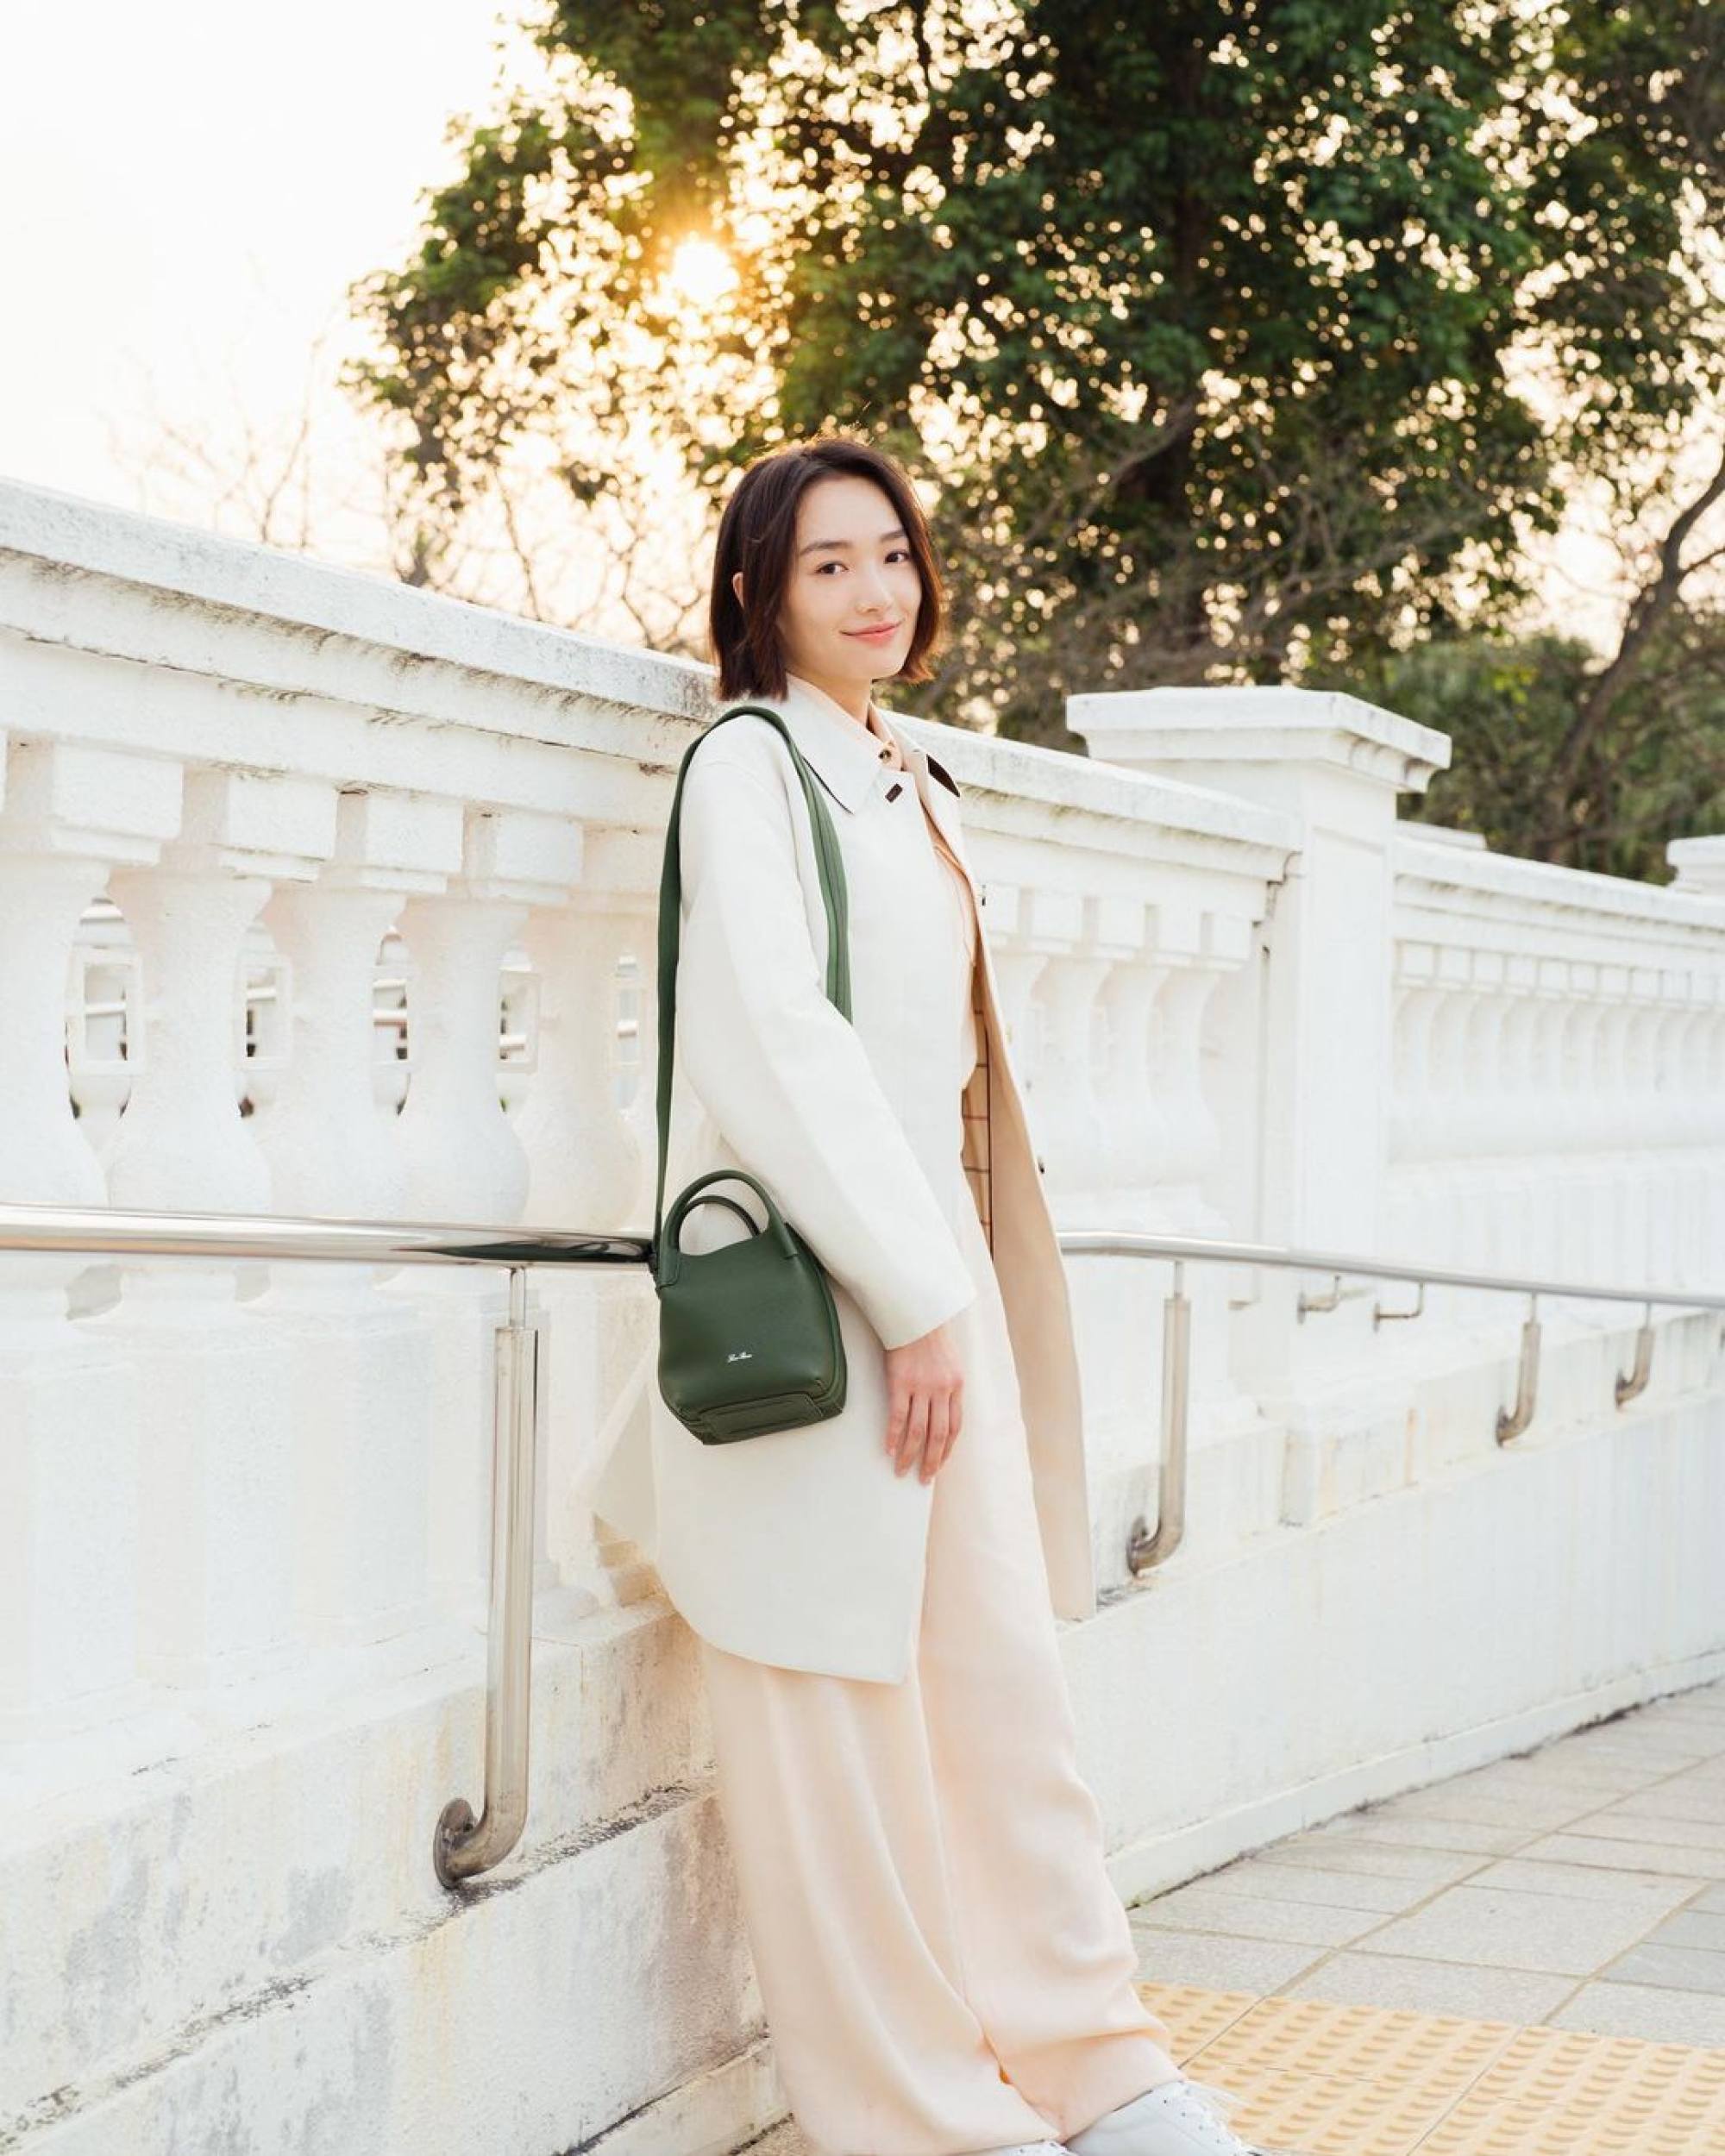 Loro Piana's Bale Bag, Refined Lines and Elegant Design